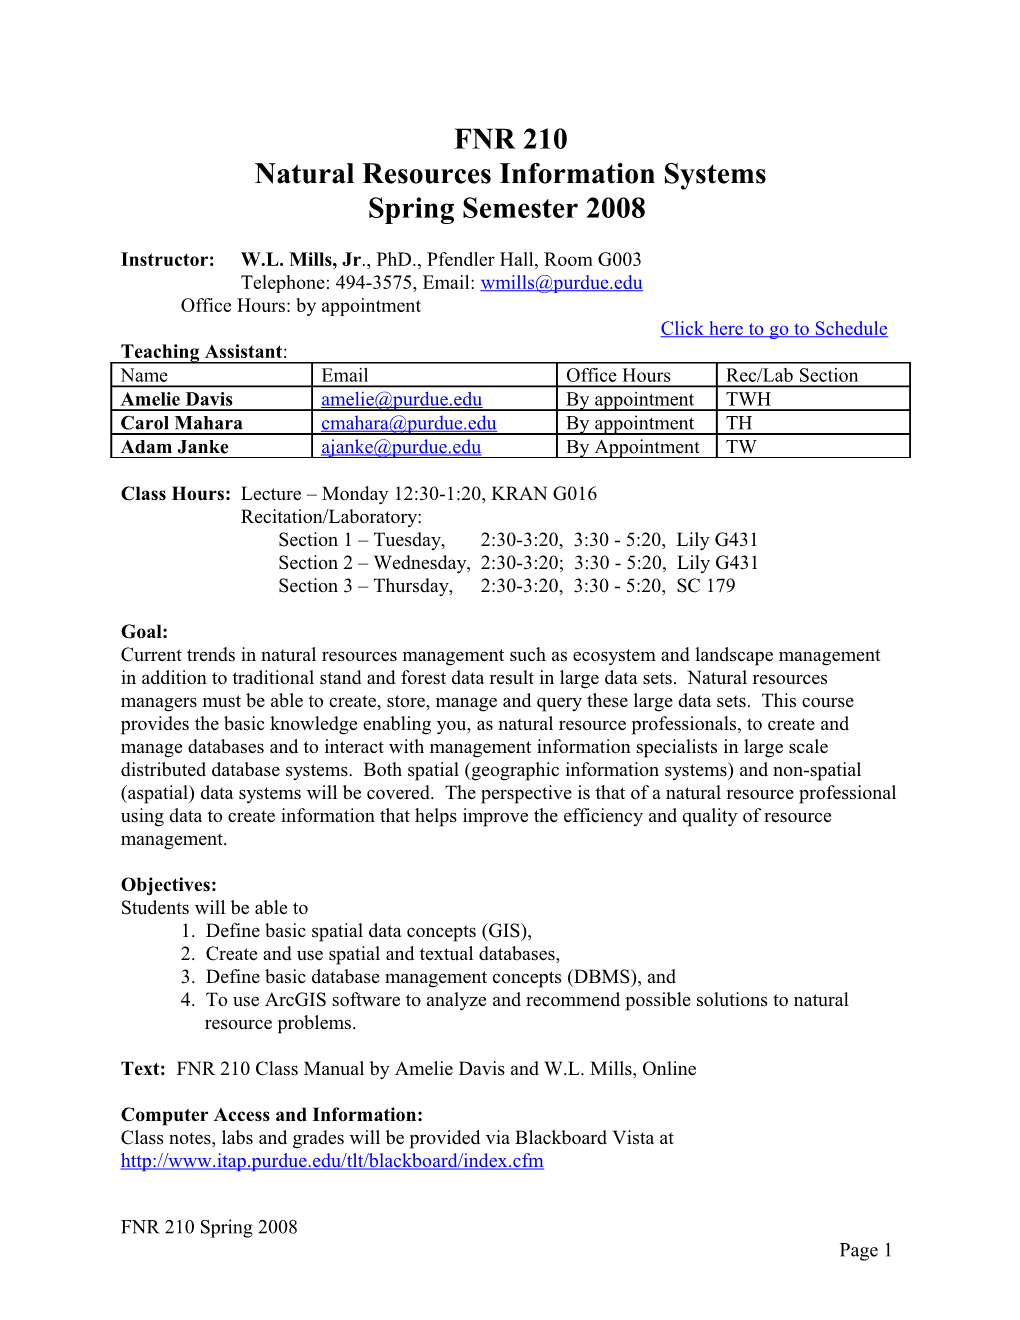 FNR 2Xx Natural Resources Information Management